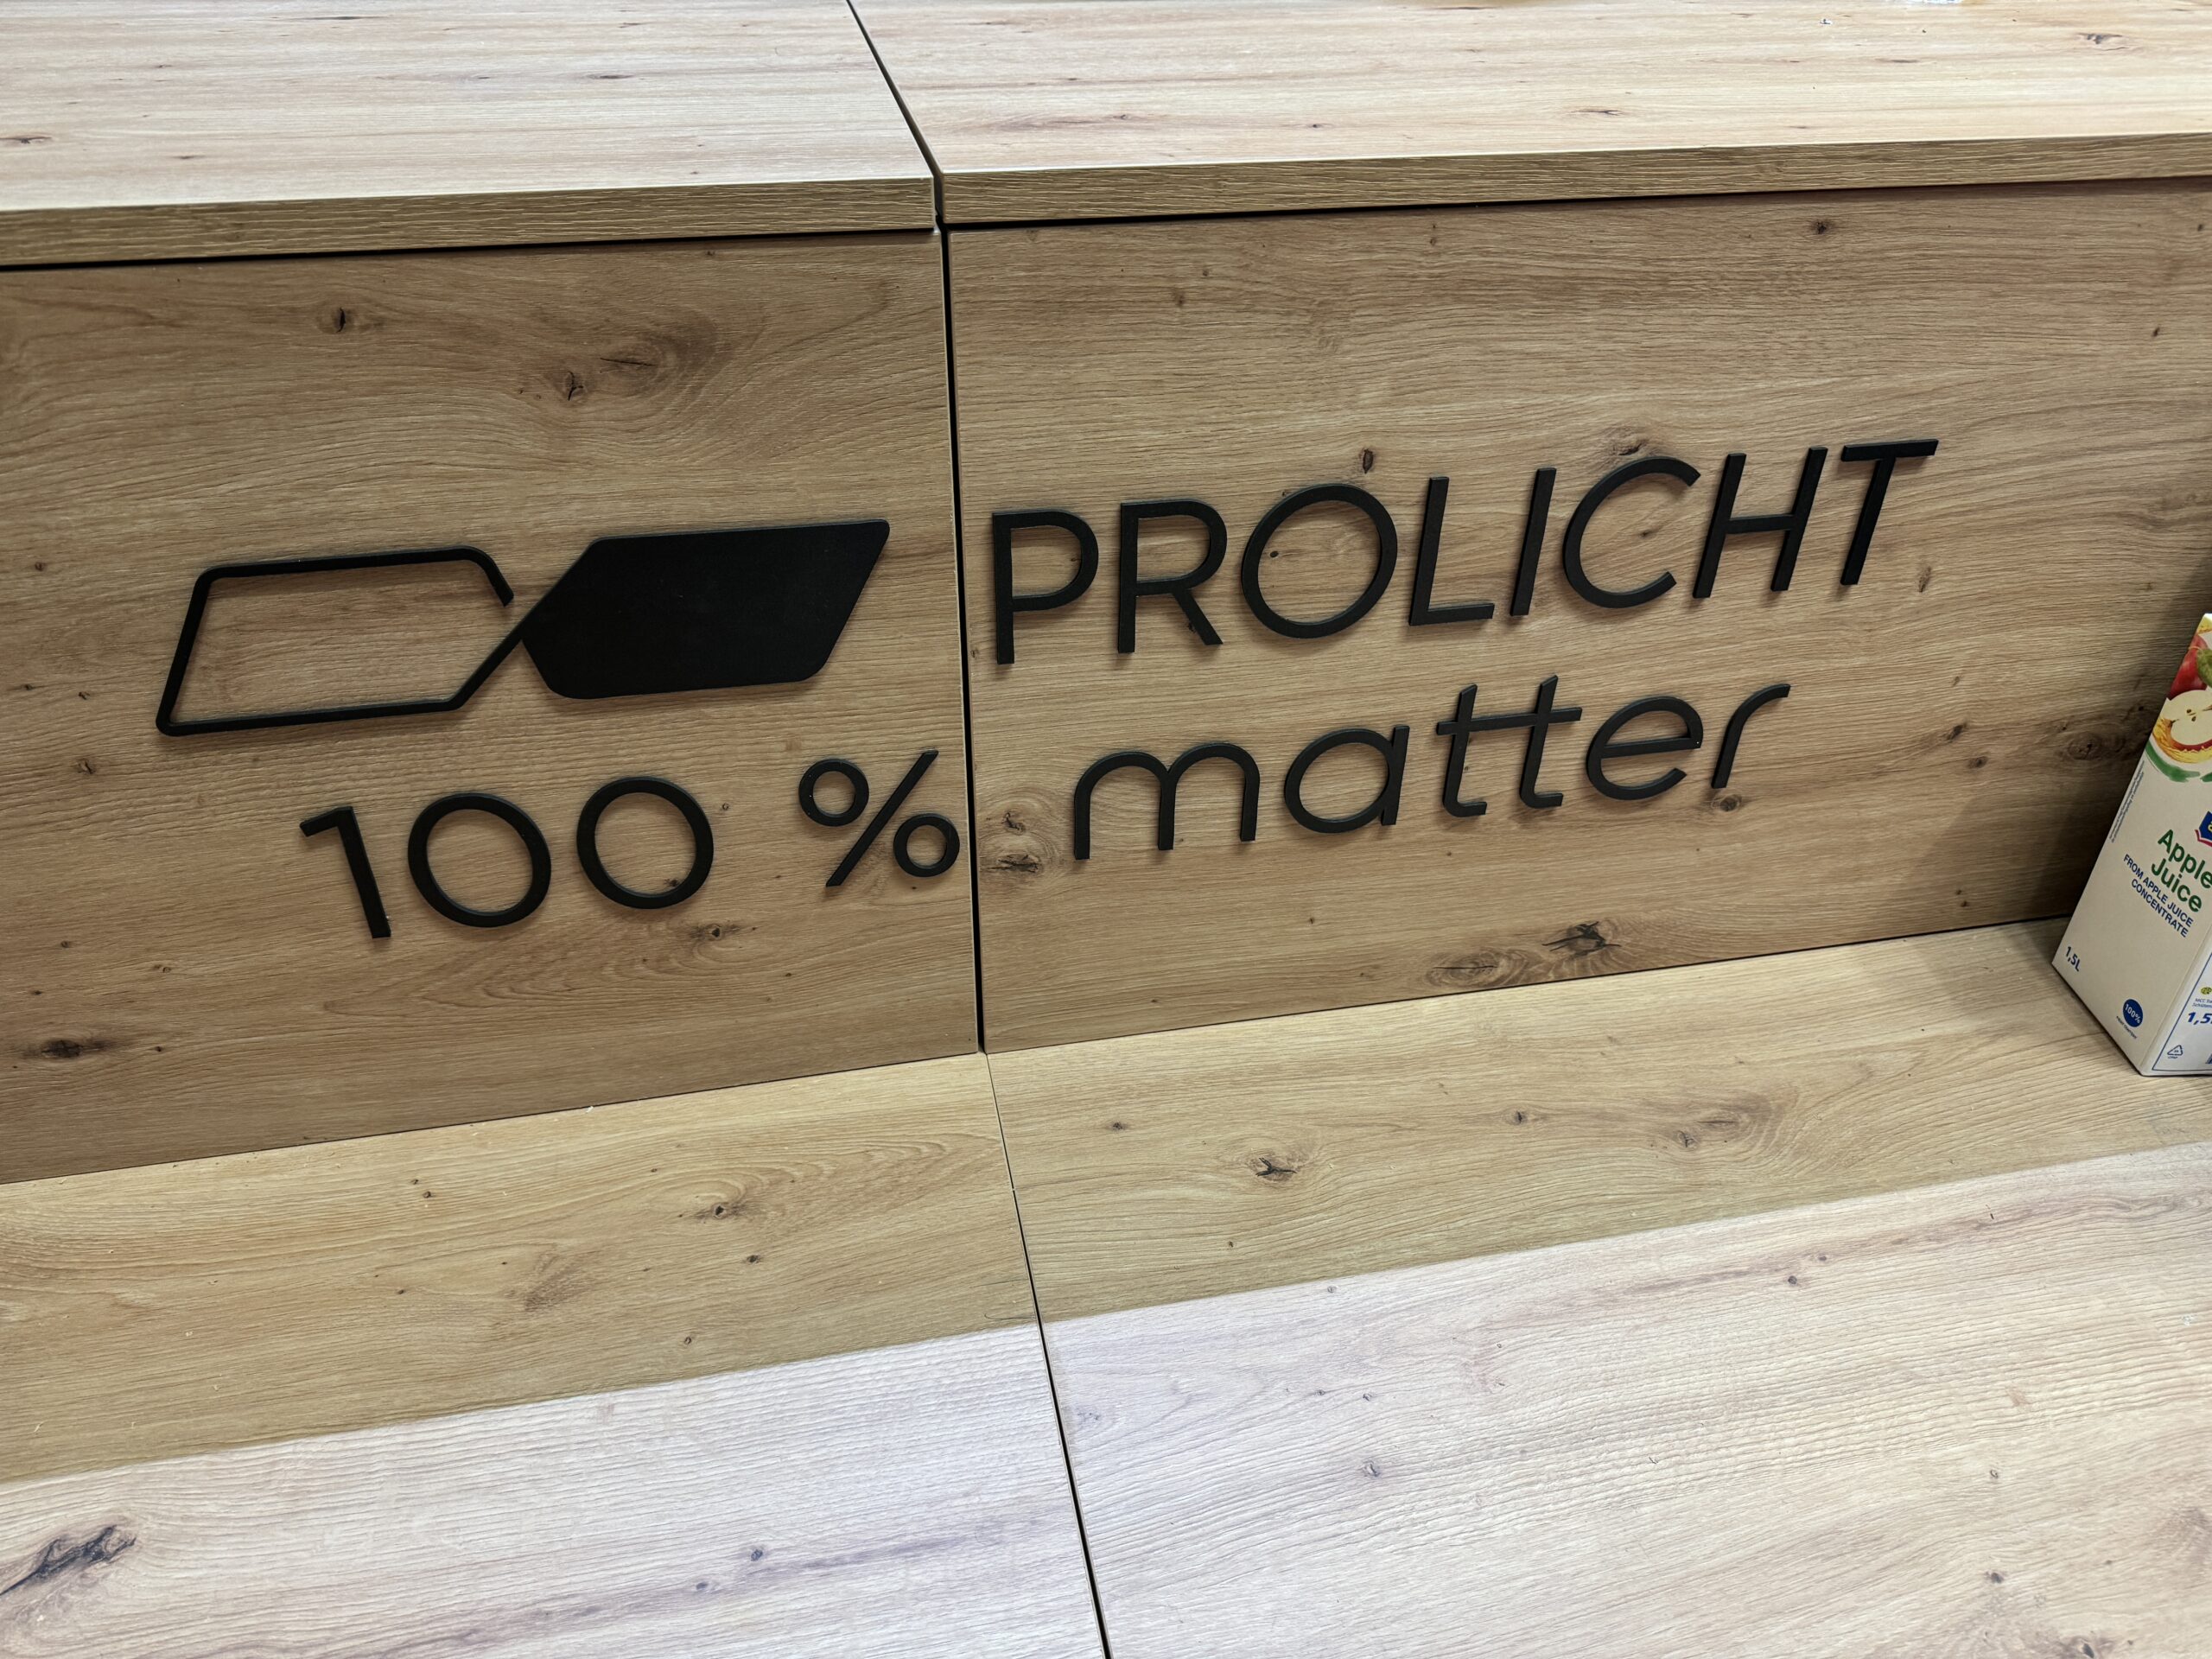 Wood case that says Prolicht 100% Matter